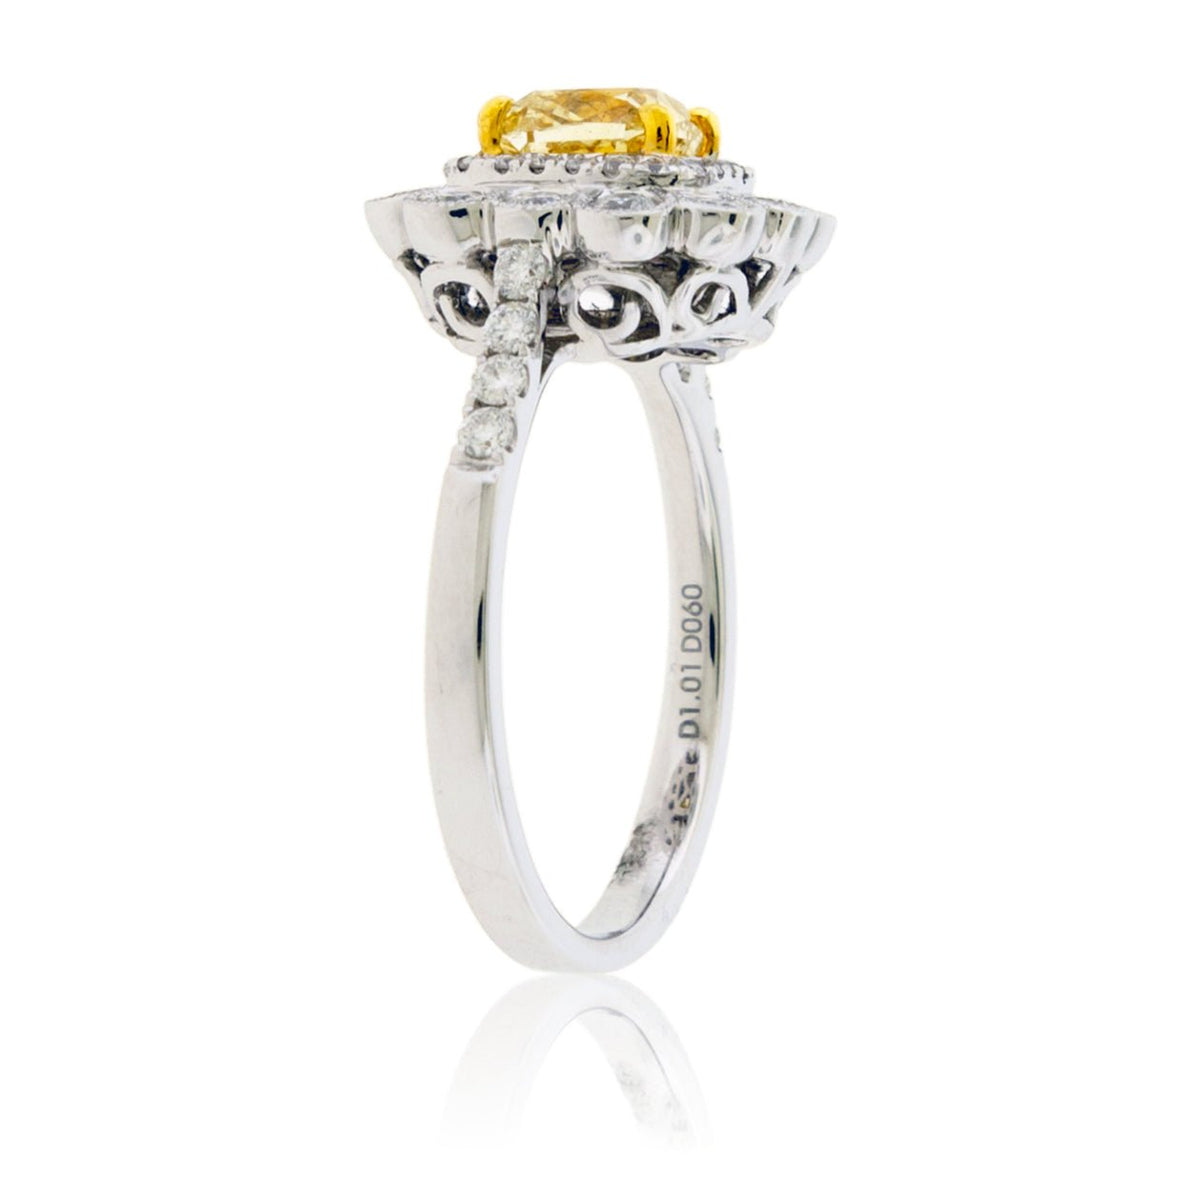 Fancy Natural Yellow Diamond & Diamond Burst Halo Ring - Park City Jewelers